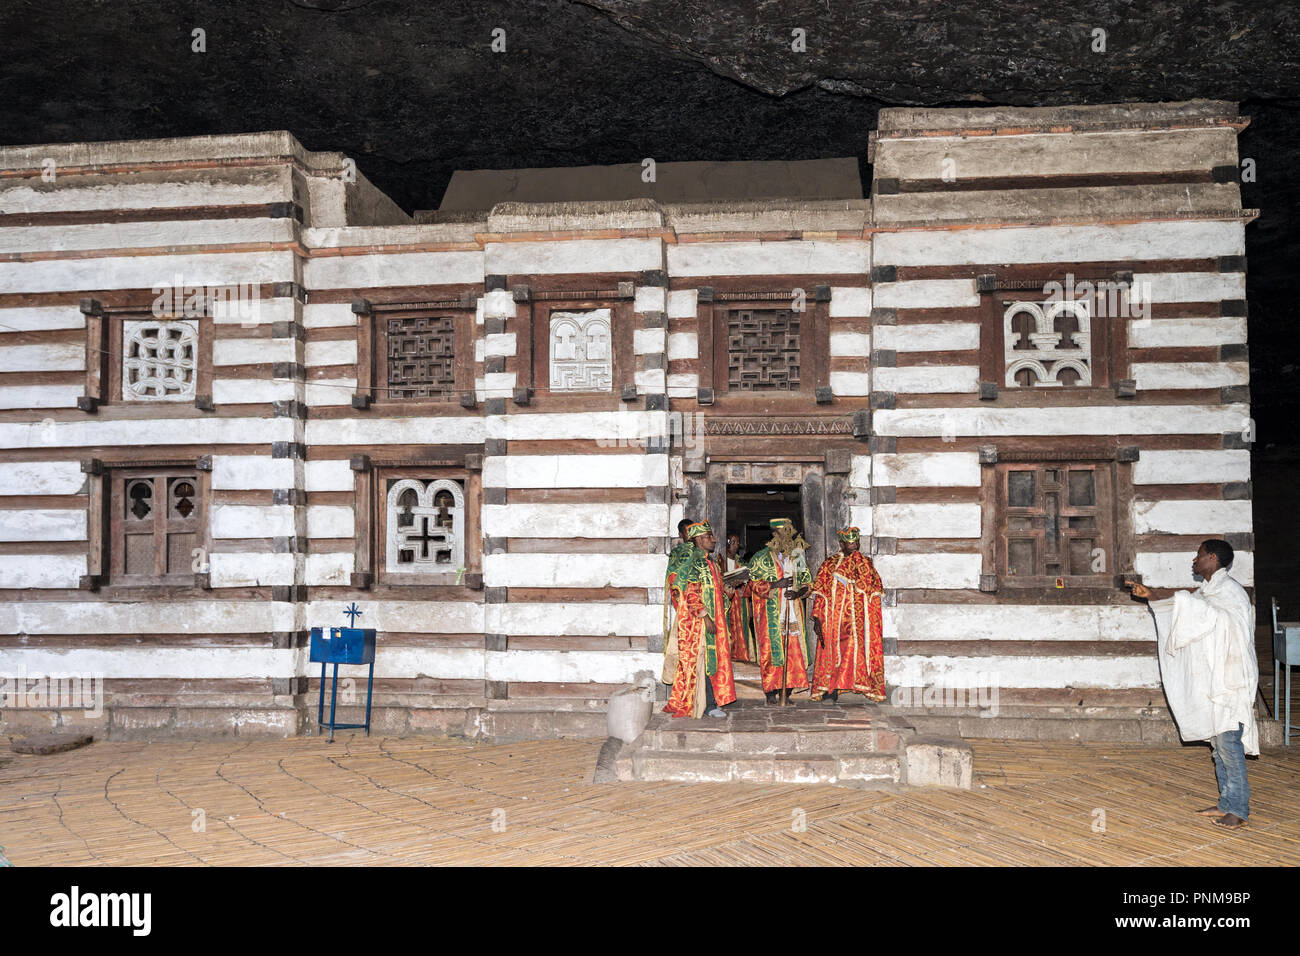 Priests and deacons: Yemrehanna Kristos Monastery, Lalibela, Ethiopia Stock Photo